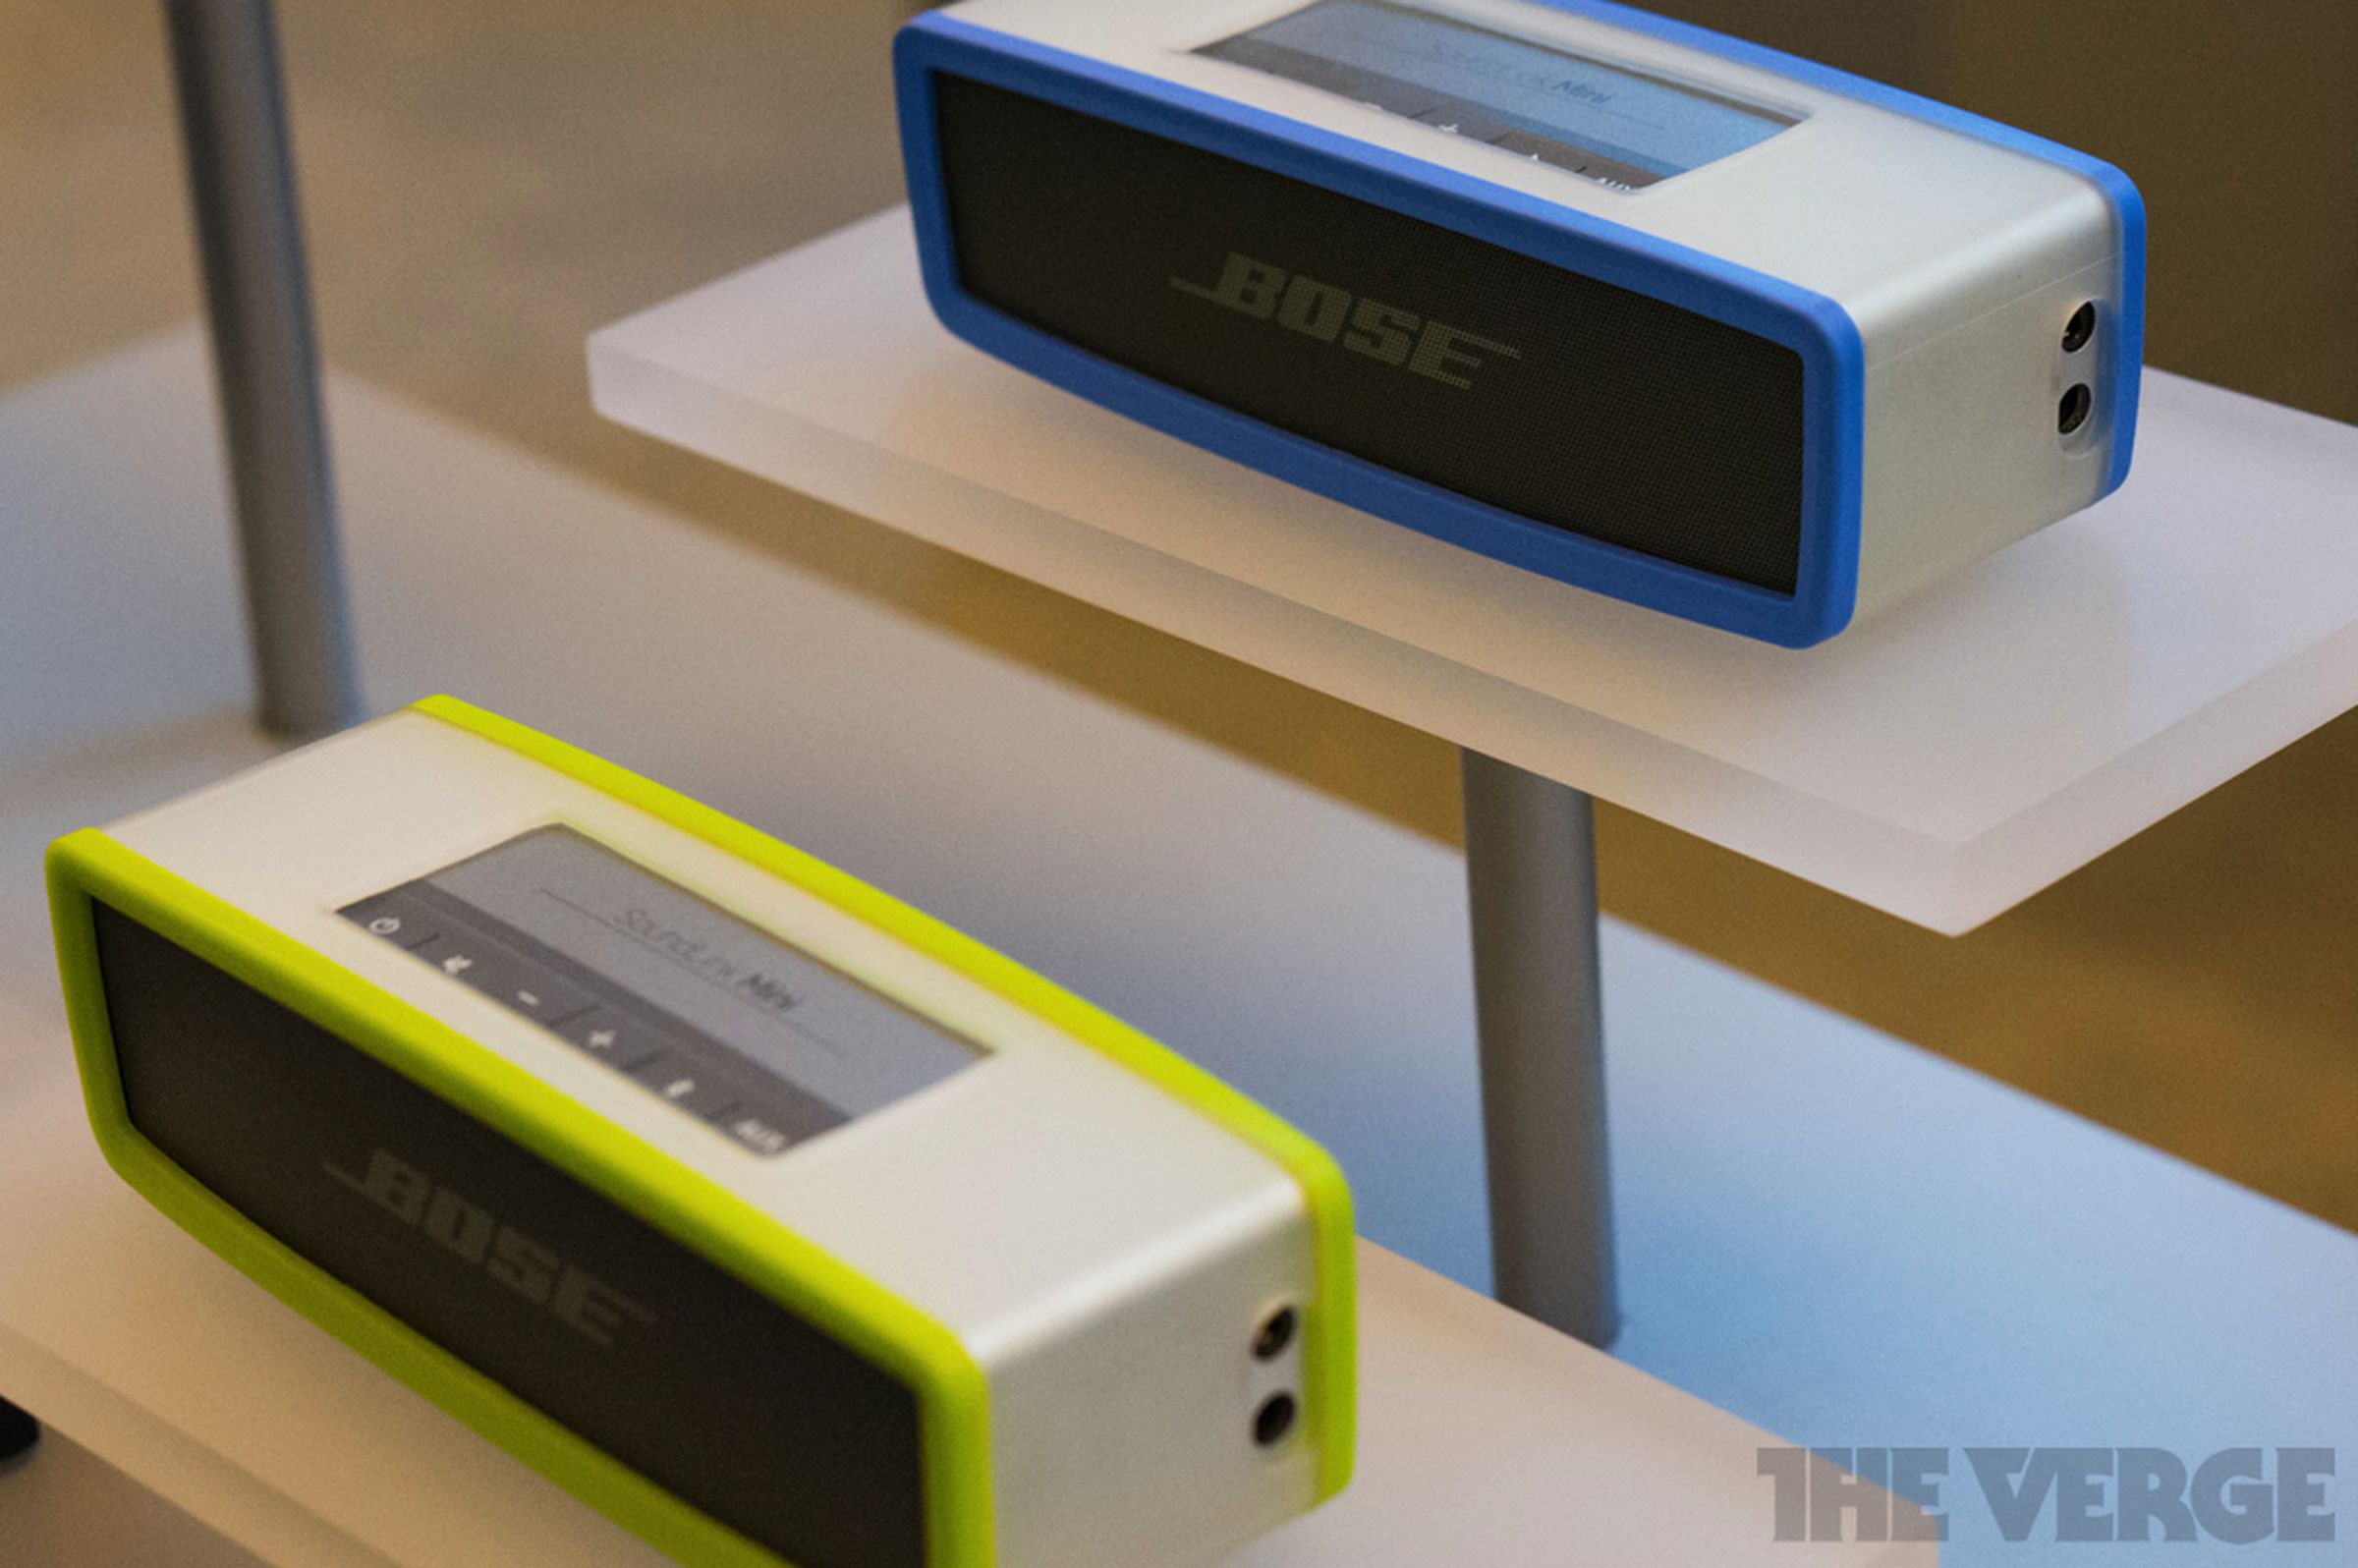 Bose SoundLink Mini hands-on photos